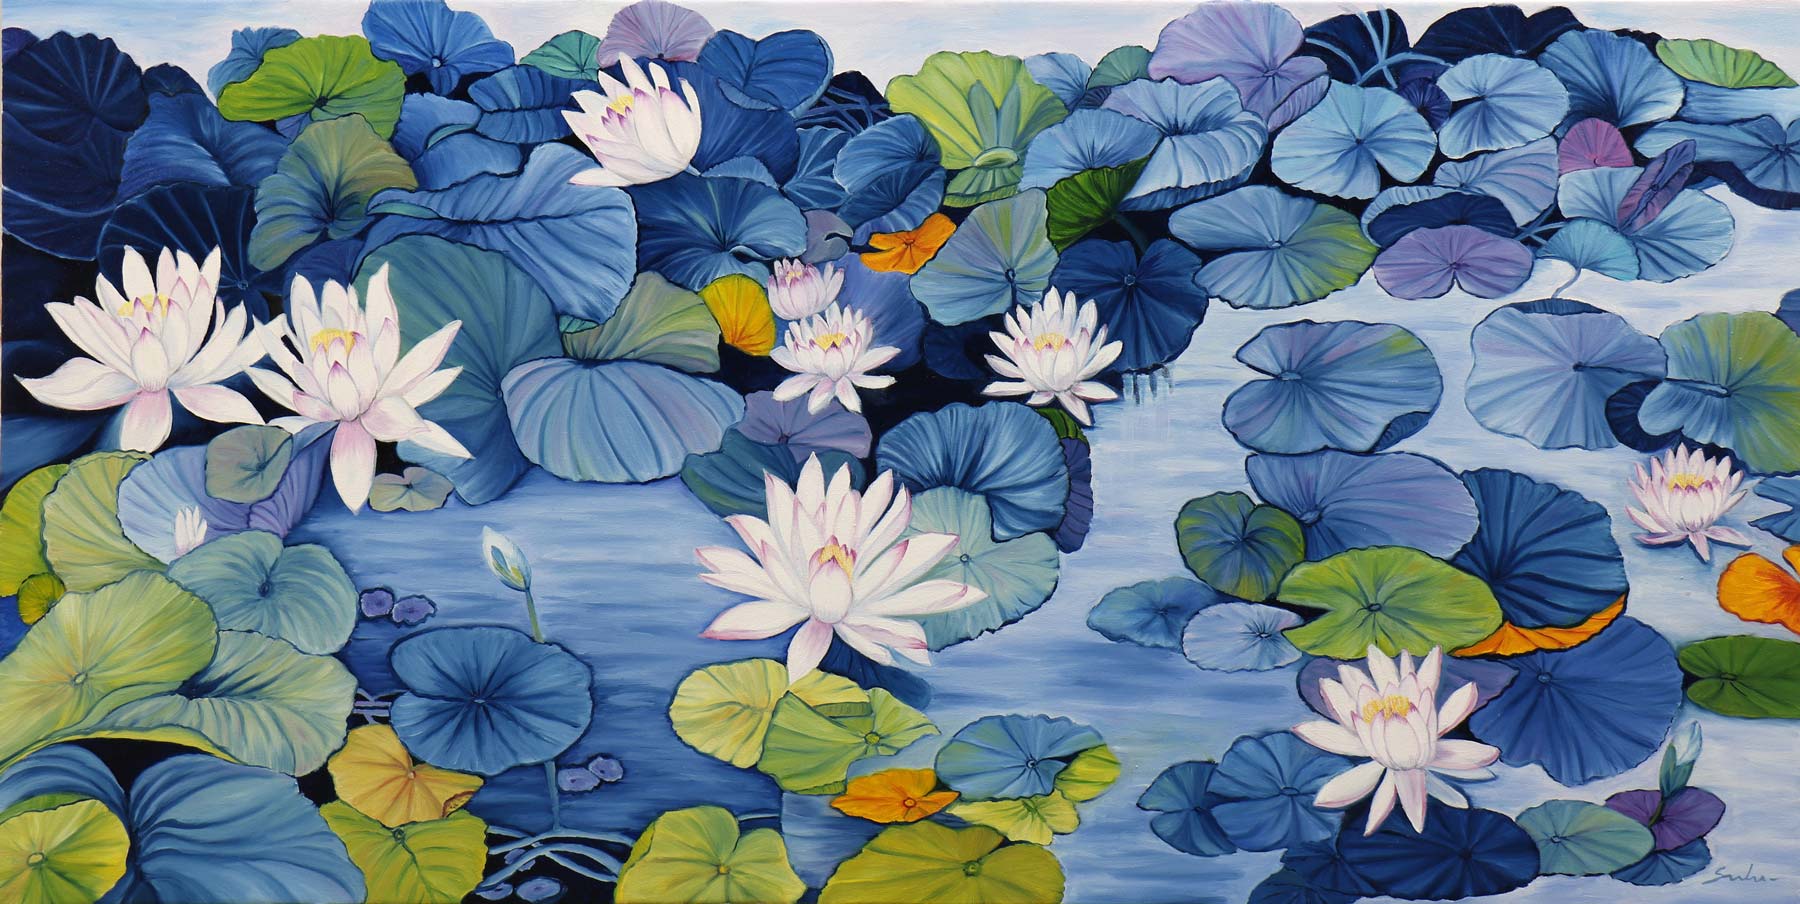 Realism Painting with Oil on Canvas "Lotus Pond 5" art by Sulakshana Dharmadhikari